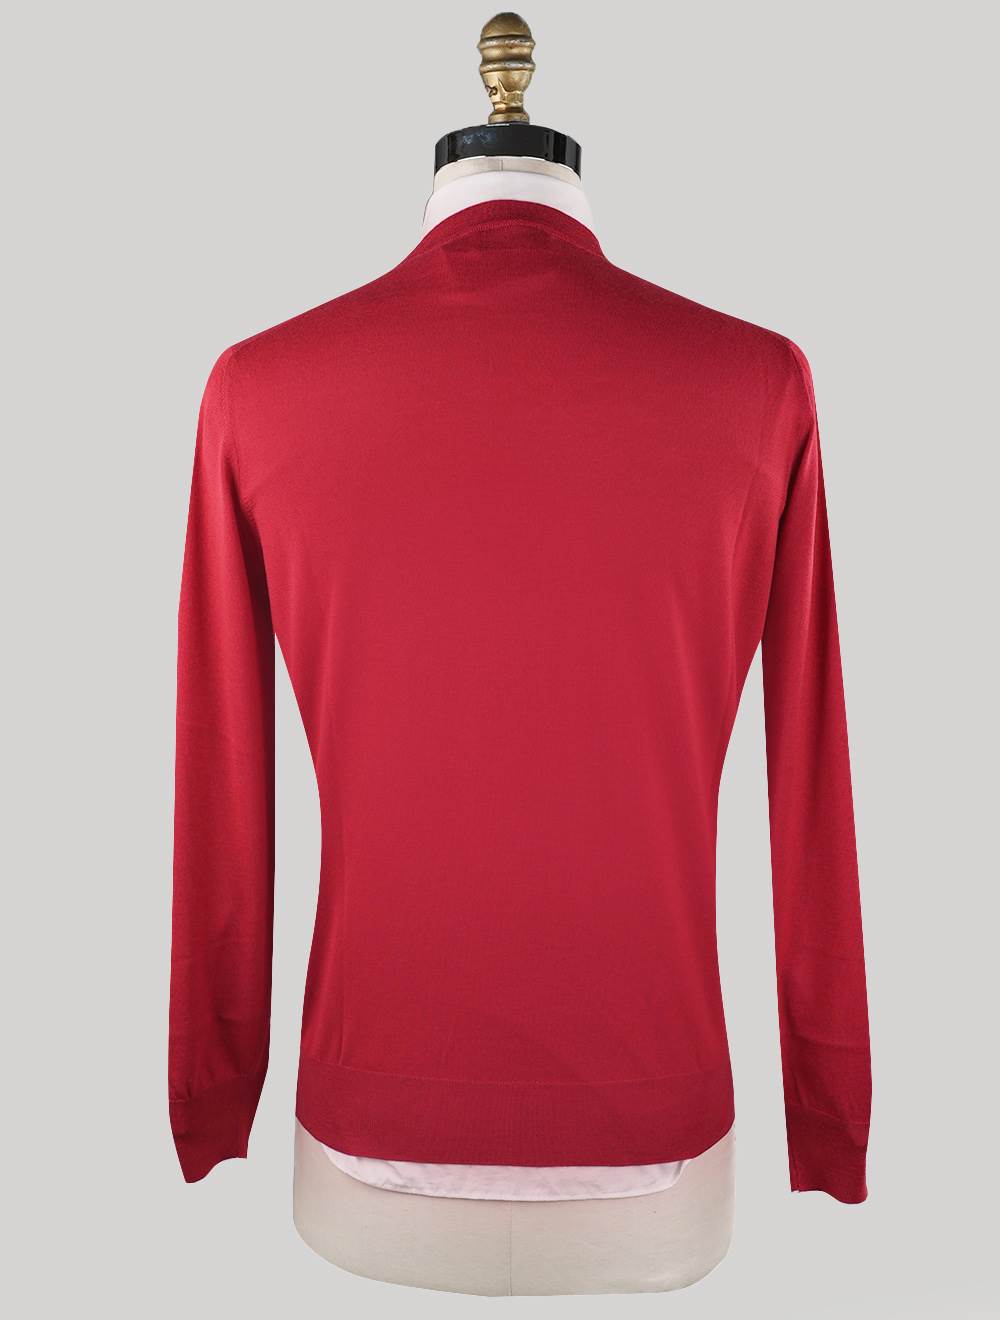 Brunello Cucinelli Red Virgin Wool Cashmere Sweater Crewneck